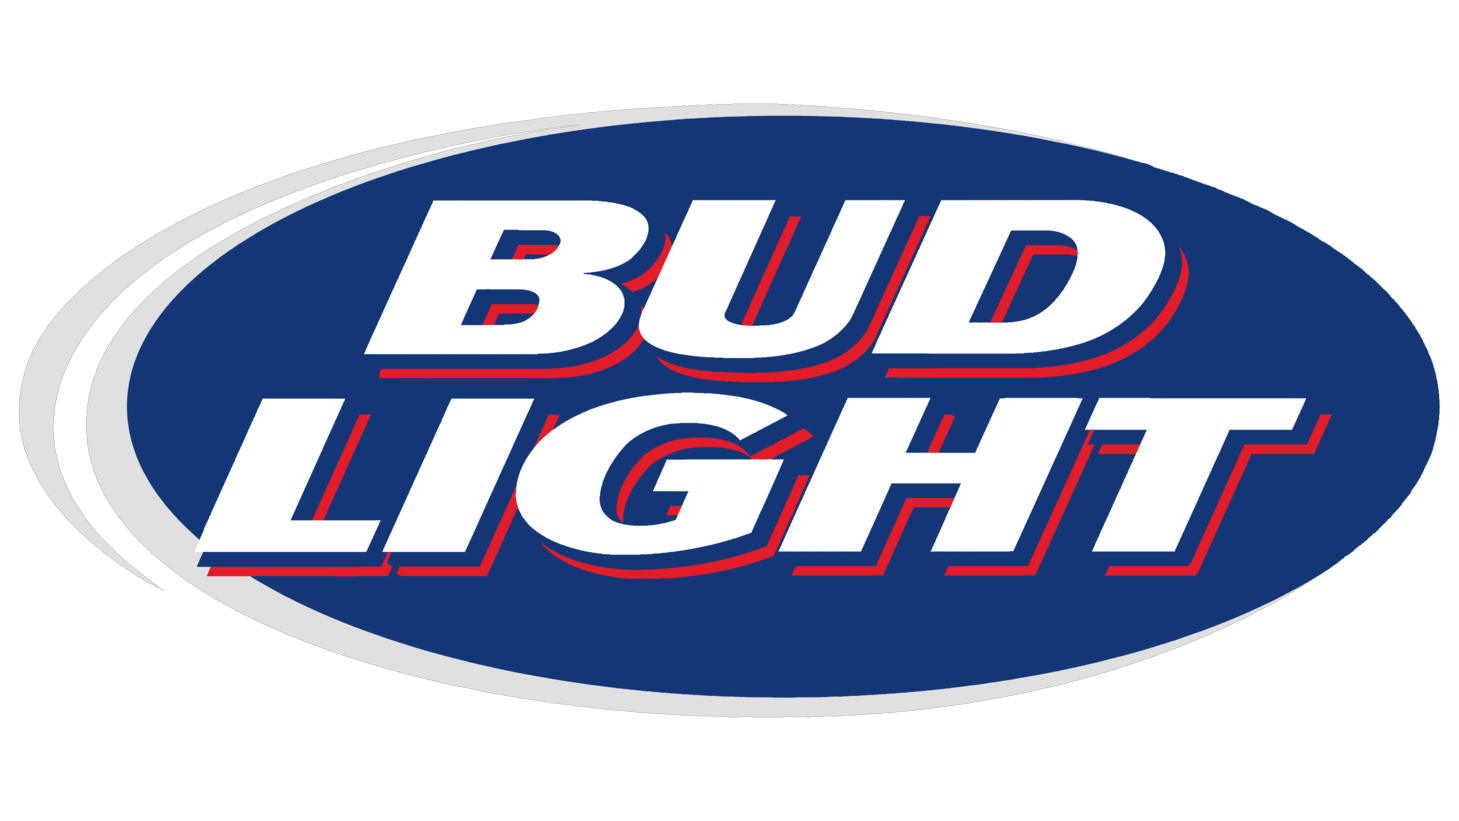 Bud light symbol